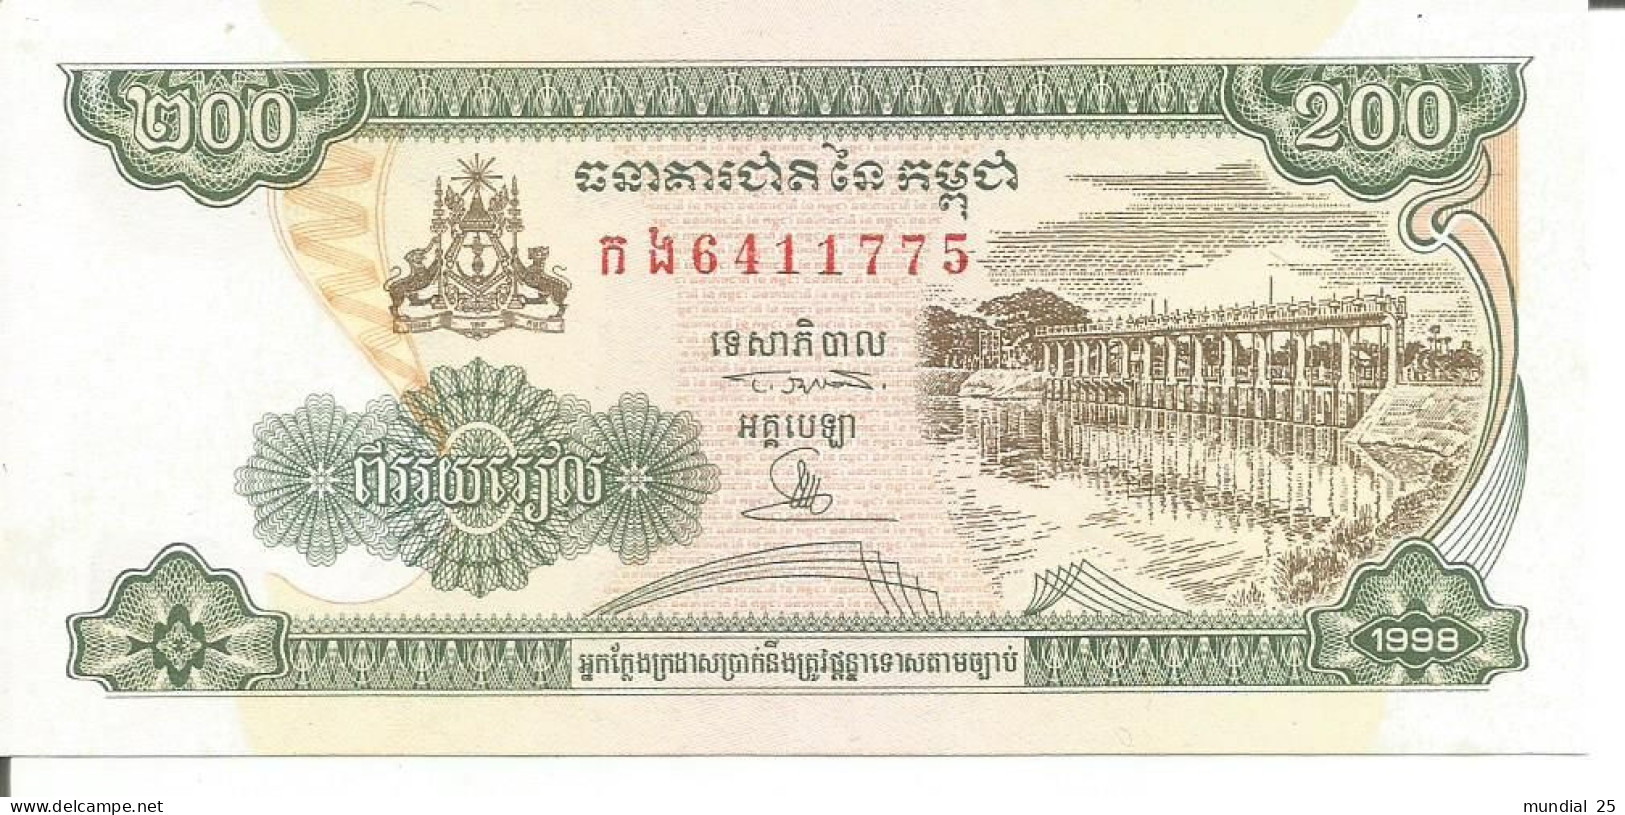 2 CAMBODIA NOTES 200 RIELS 1998 - Cambodia